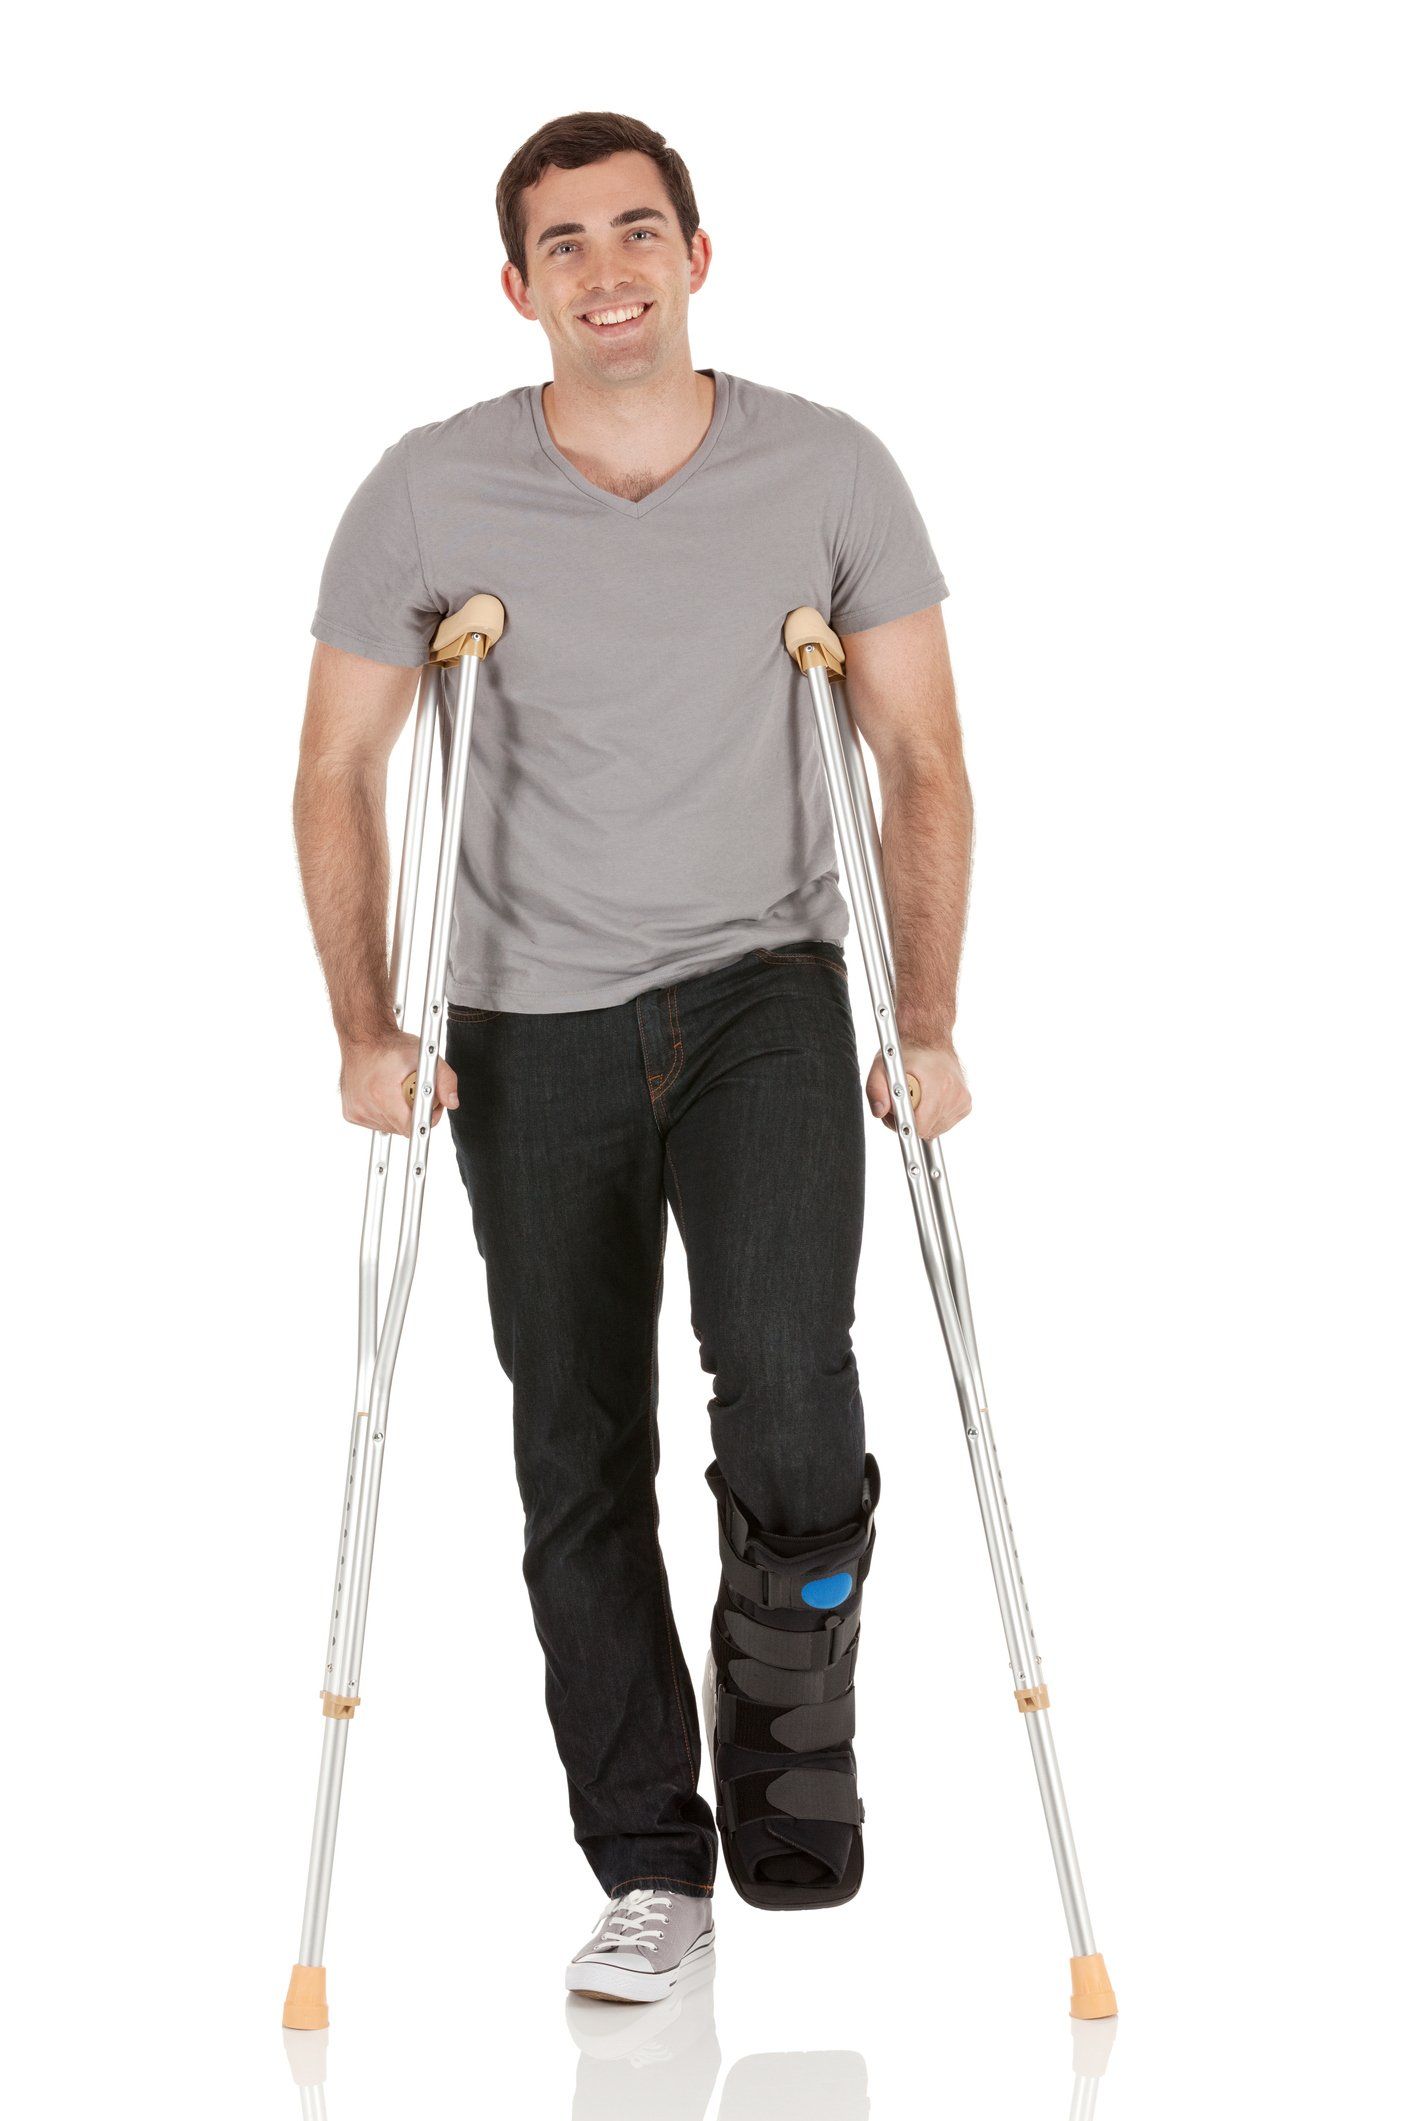 Injured Man Walking With The Help Of Crutches - Princeton WV - Sanders & Austin